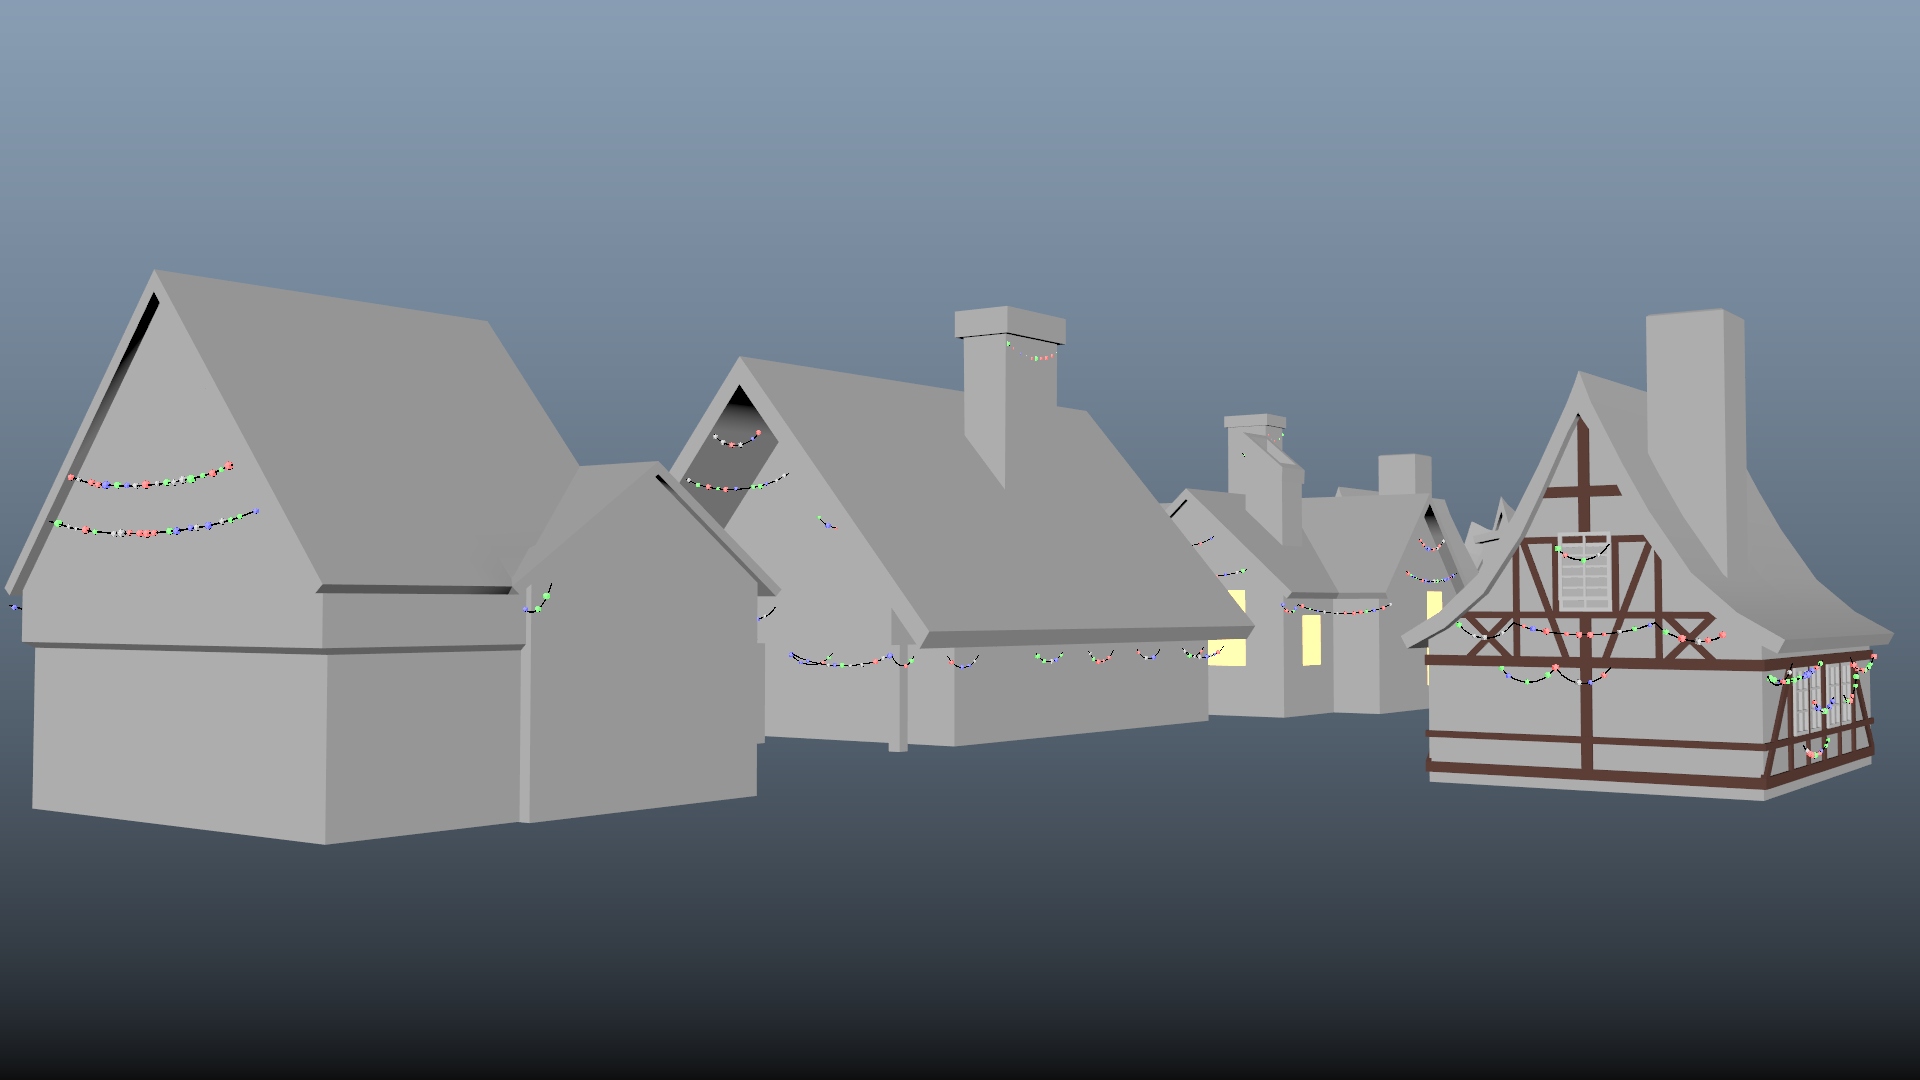 Mehrere 3D Modell Häuser mit Kaminen mit Lichterketten geschmückt